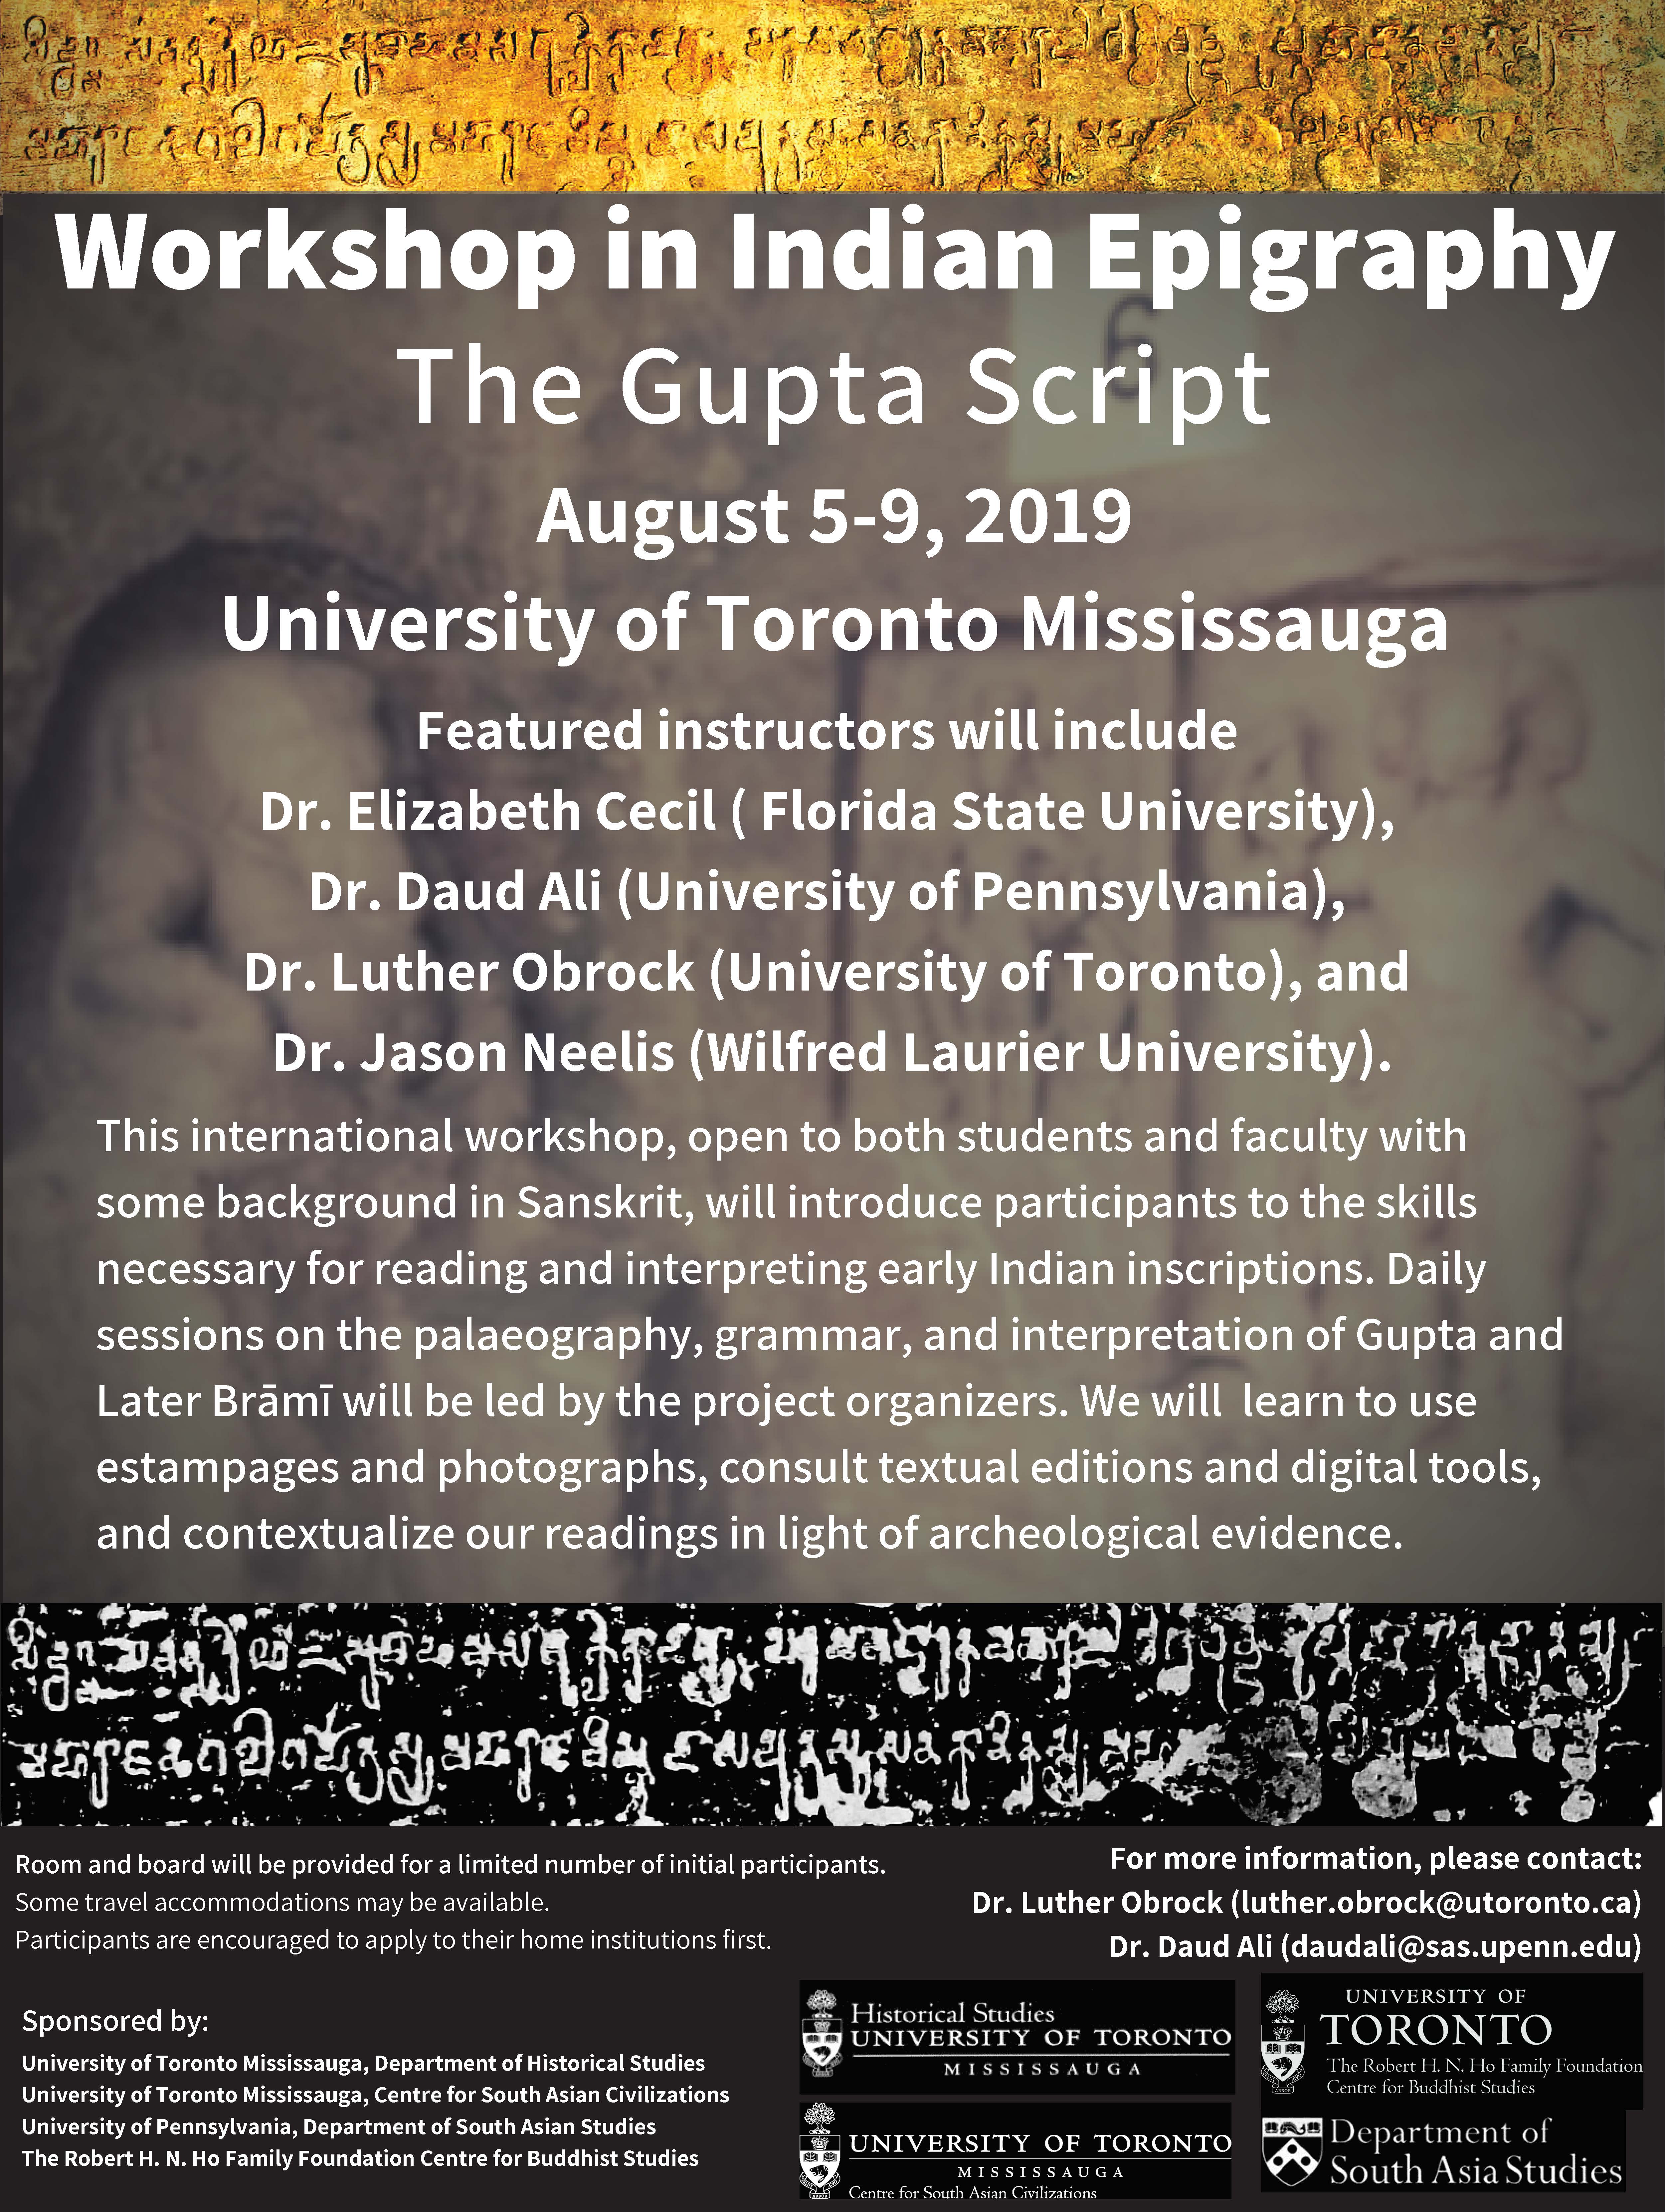 poster-epigraphy-workshop-2019-gupta-script-1